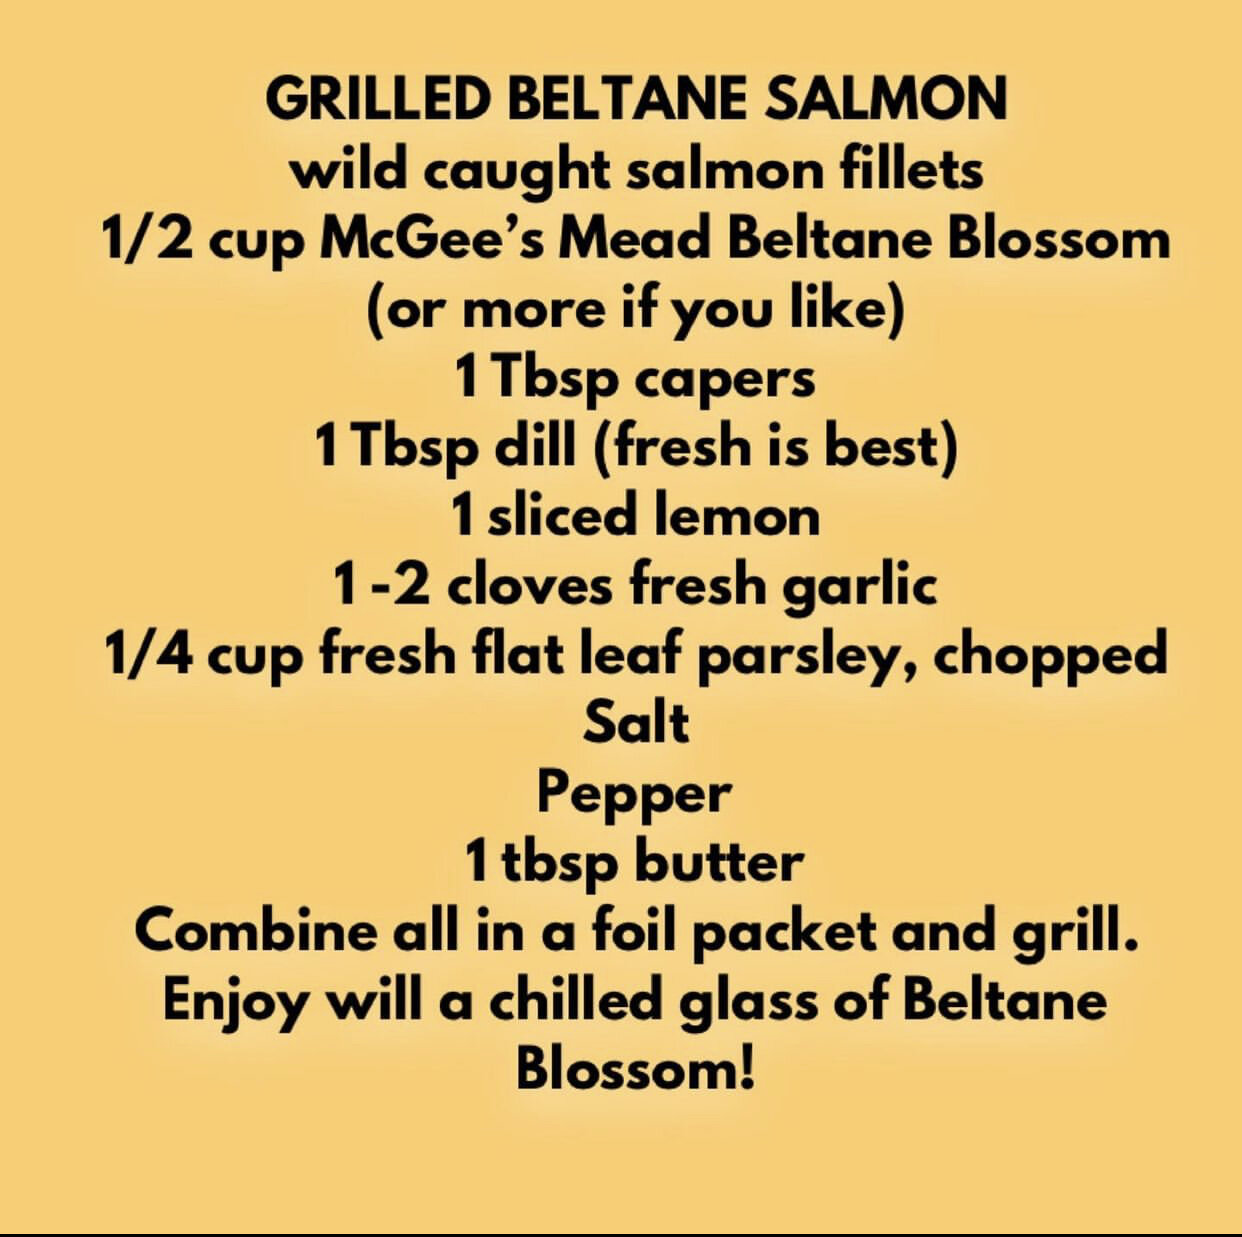 grilled beltane salmon recipe.jpg